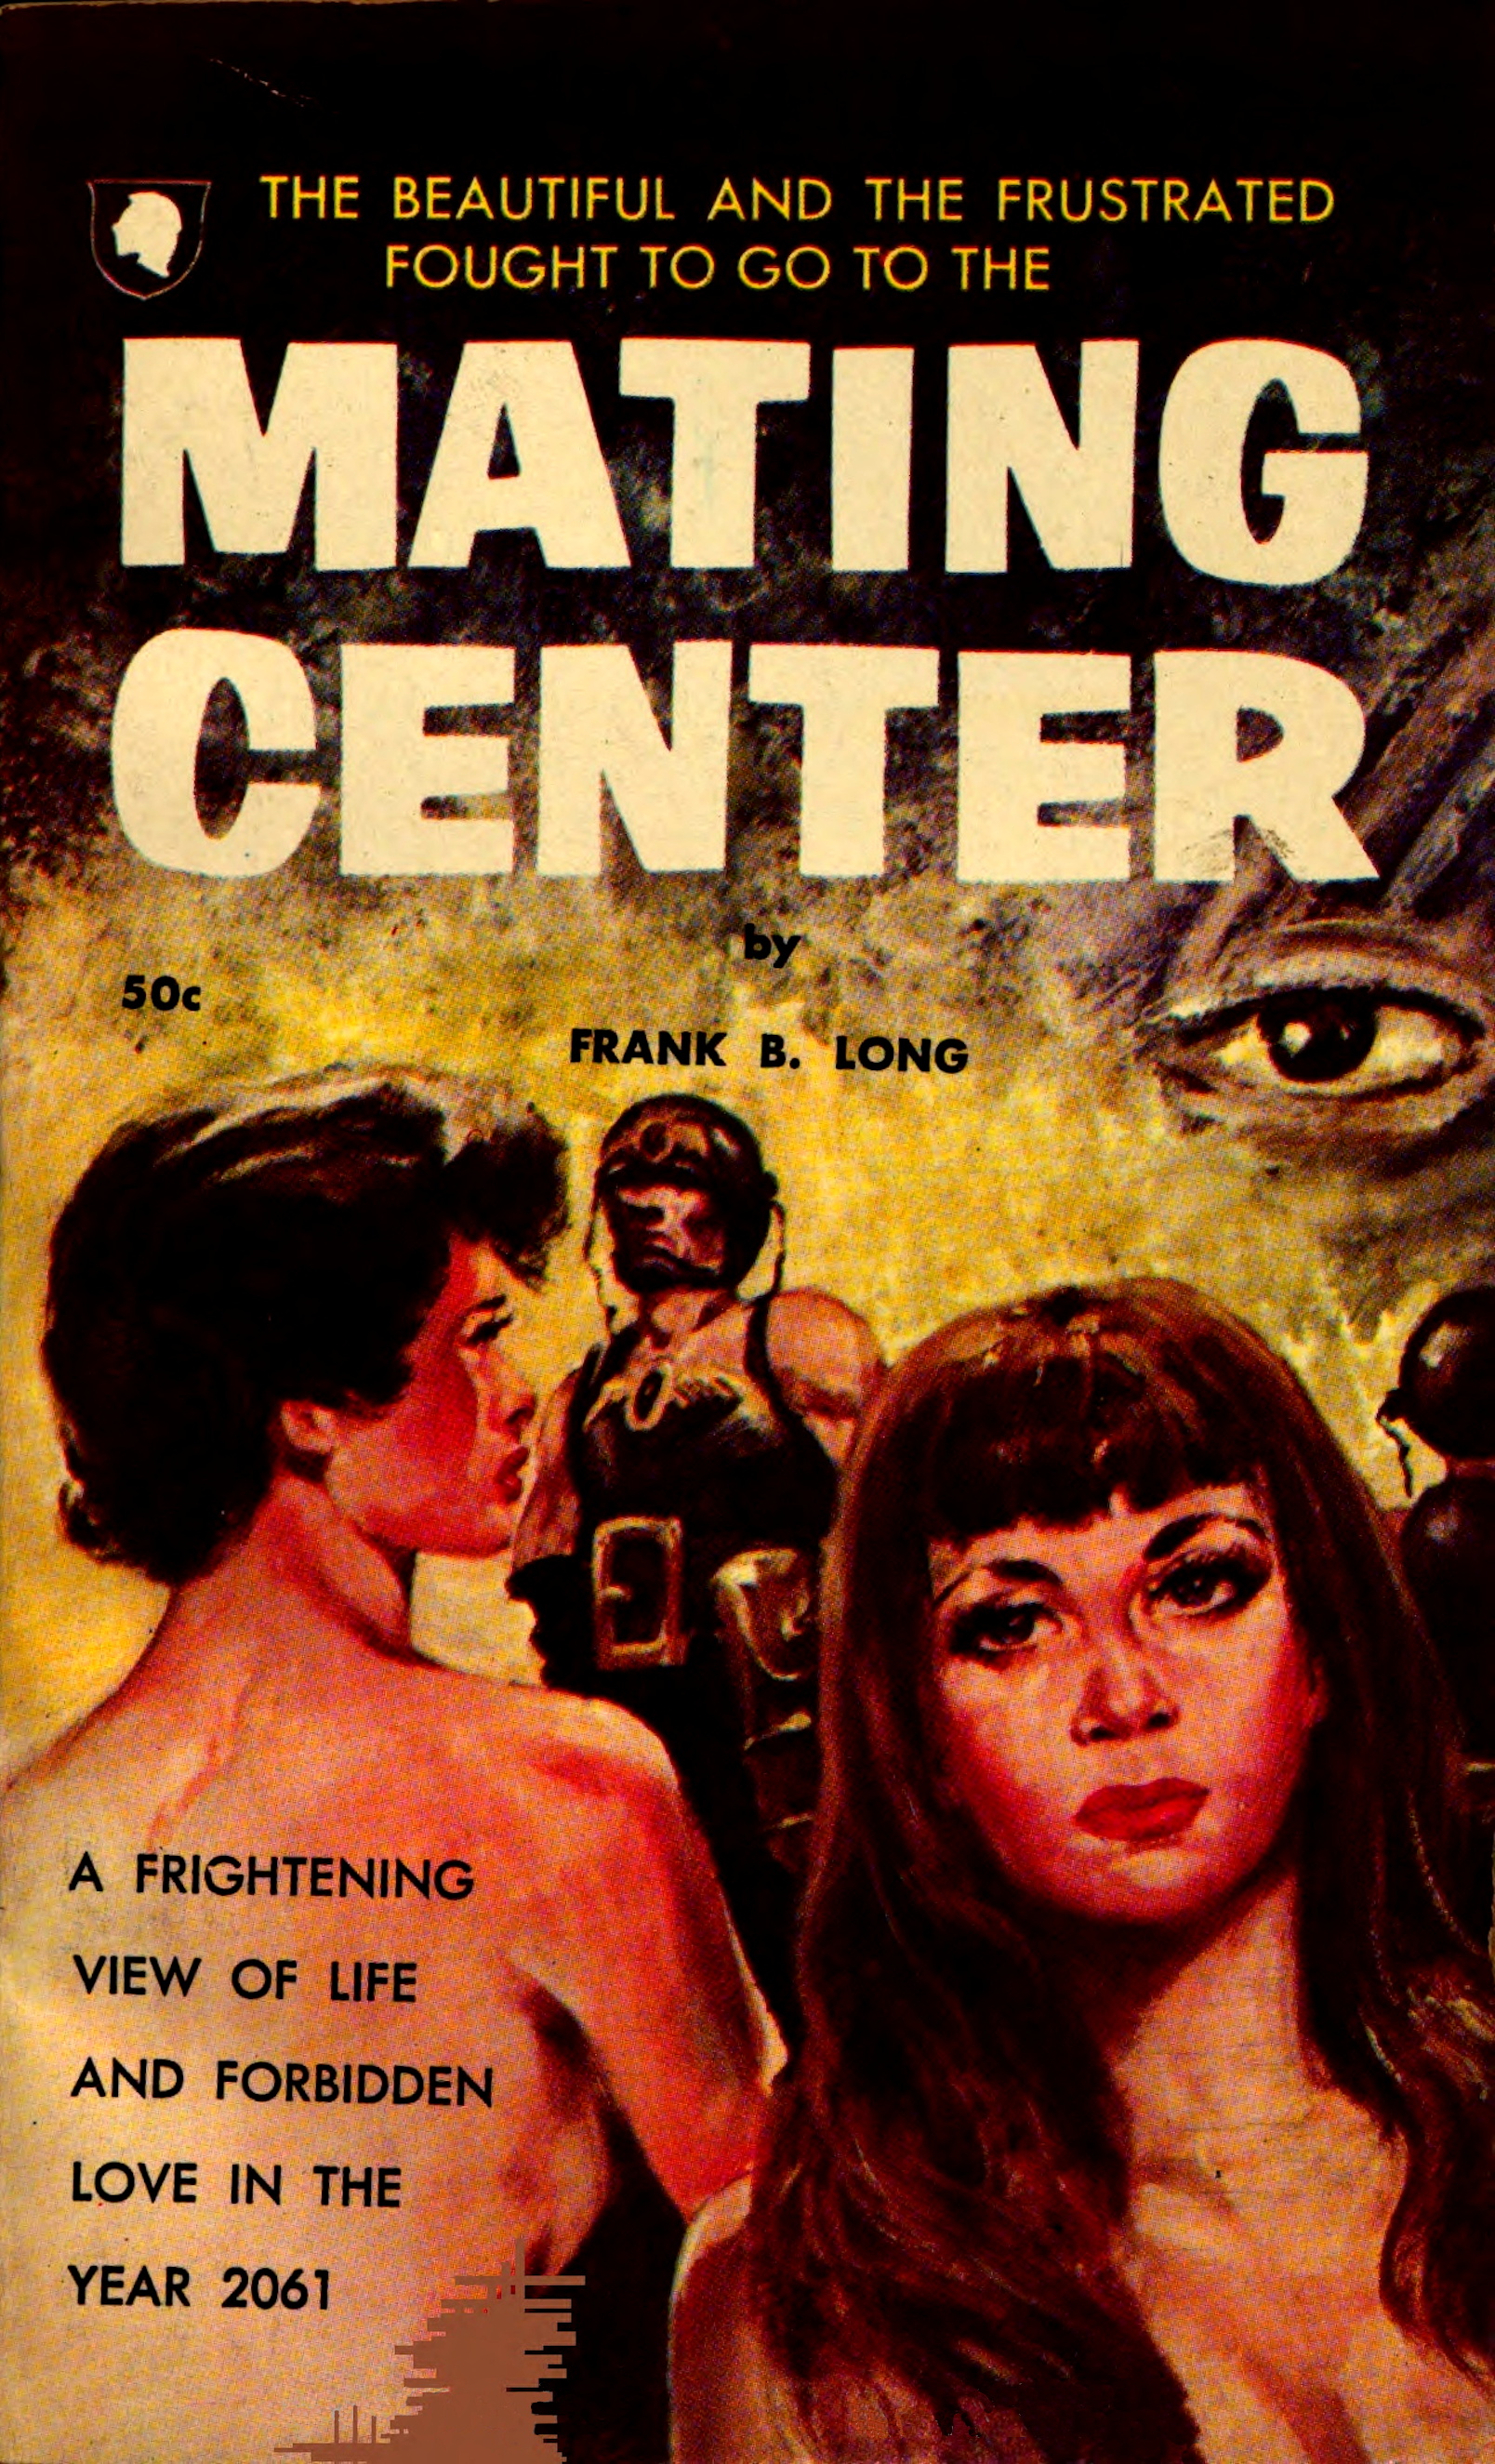 Mating center